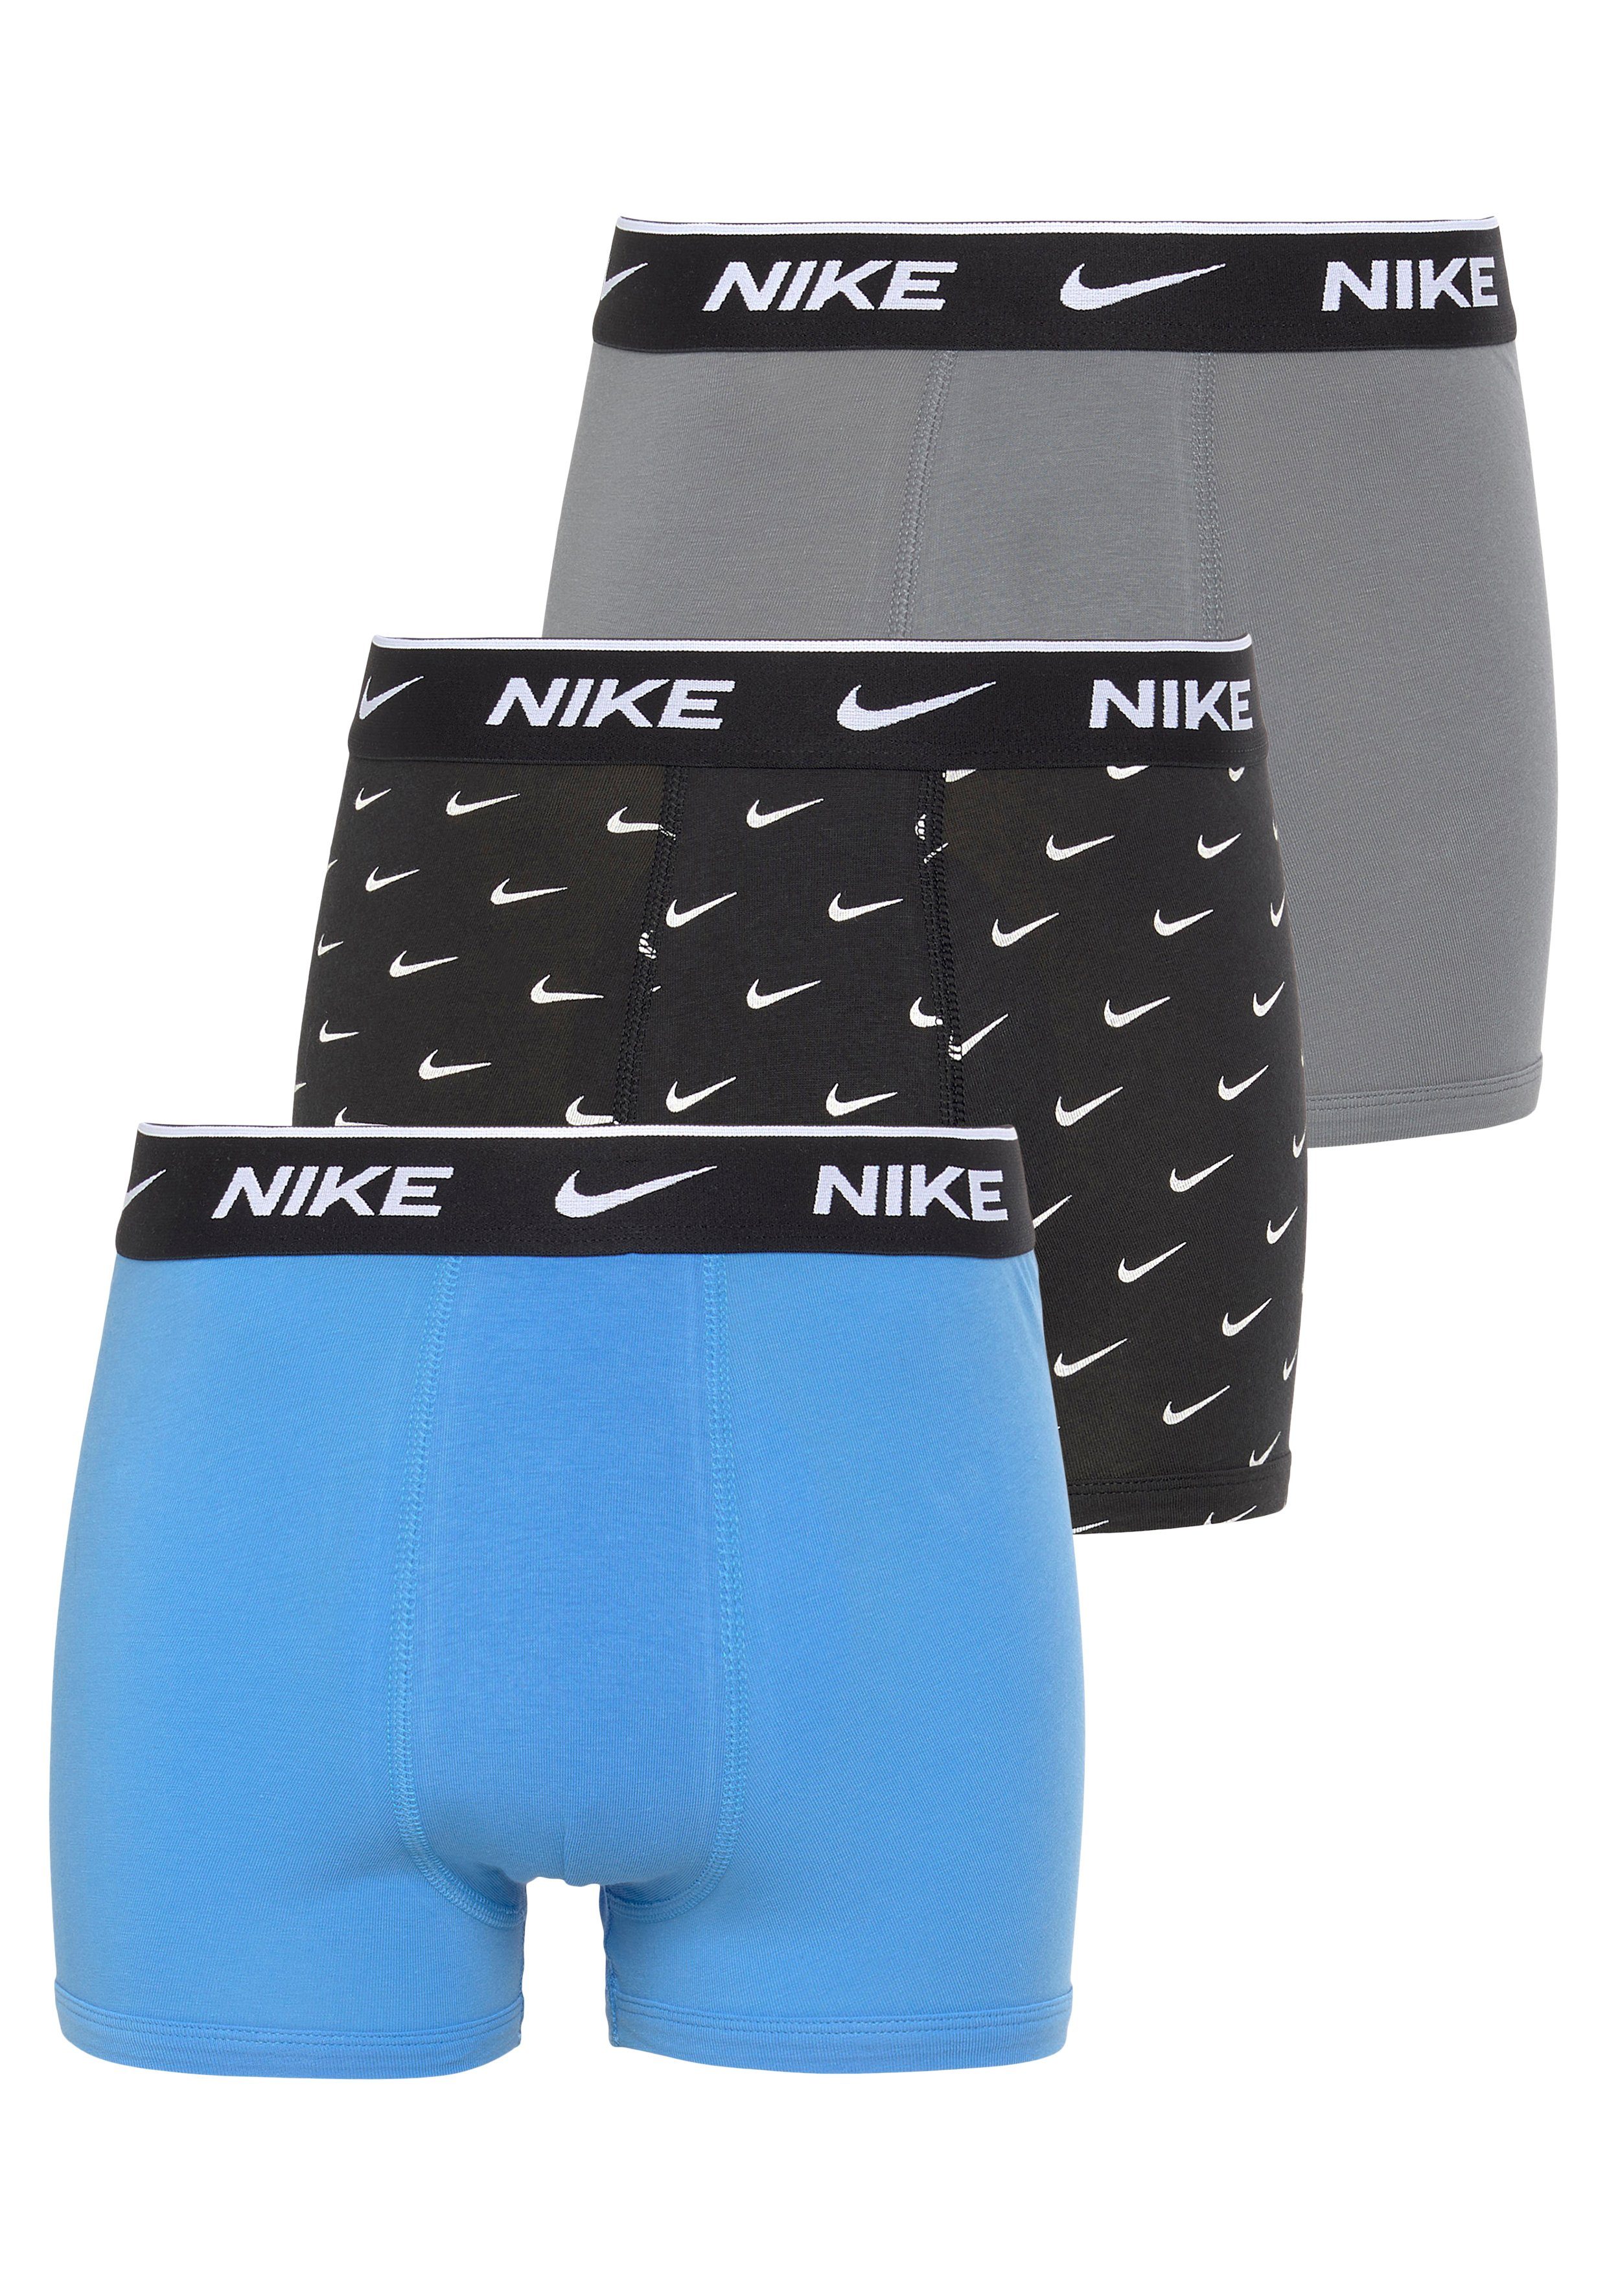 Nike PRINTED EVERYDAY Sportswear COTTON 3er-Pack) BRIEF (Packung, für - Boxershorts 3-St., Kinder 3PK BOXER